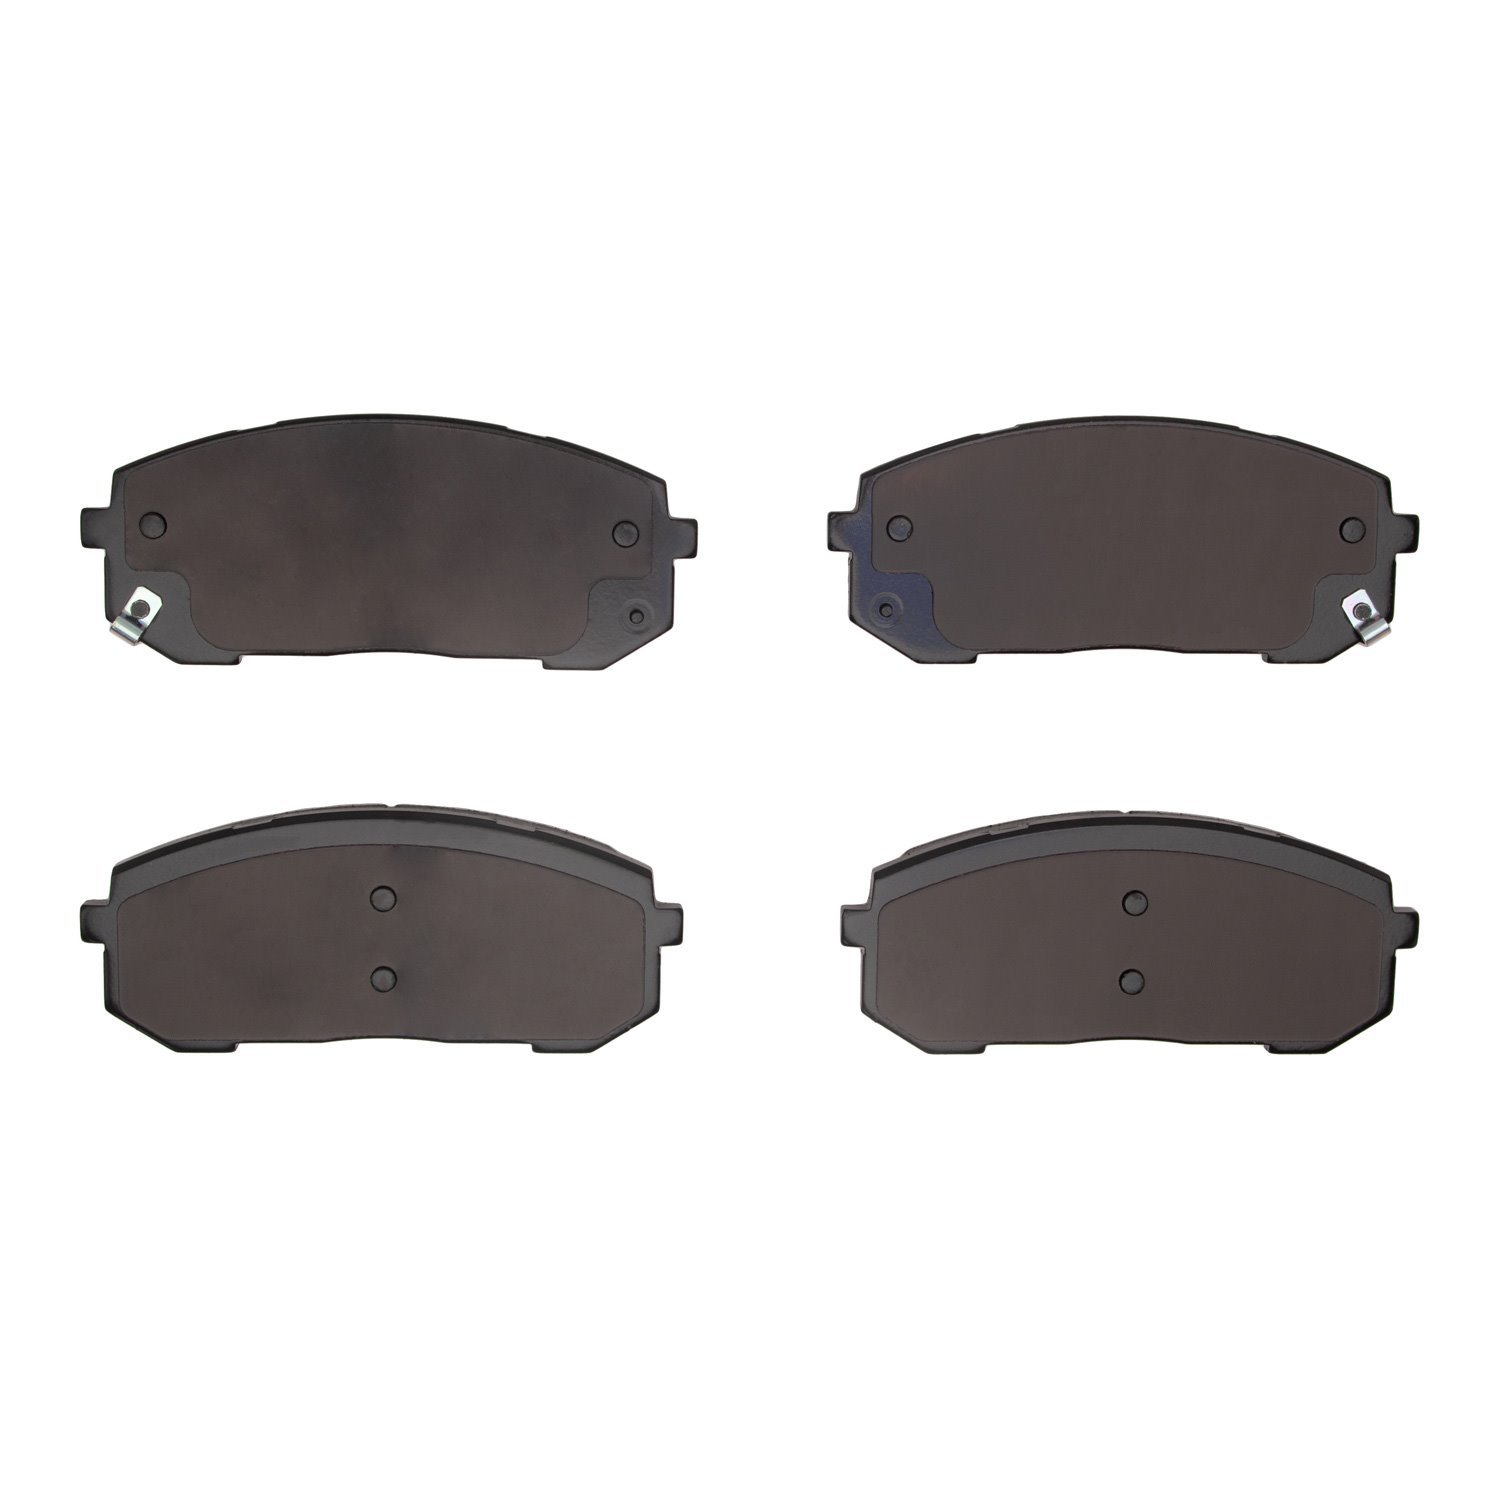 1551-2302-00 5000 Advanced Ceramic Brake Pads, Fits Select Kia/Hyundai/Genesis, Position: Front